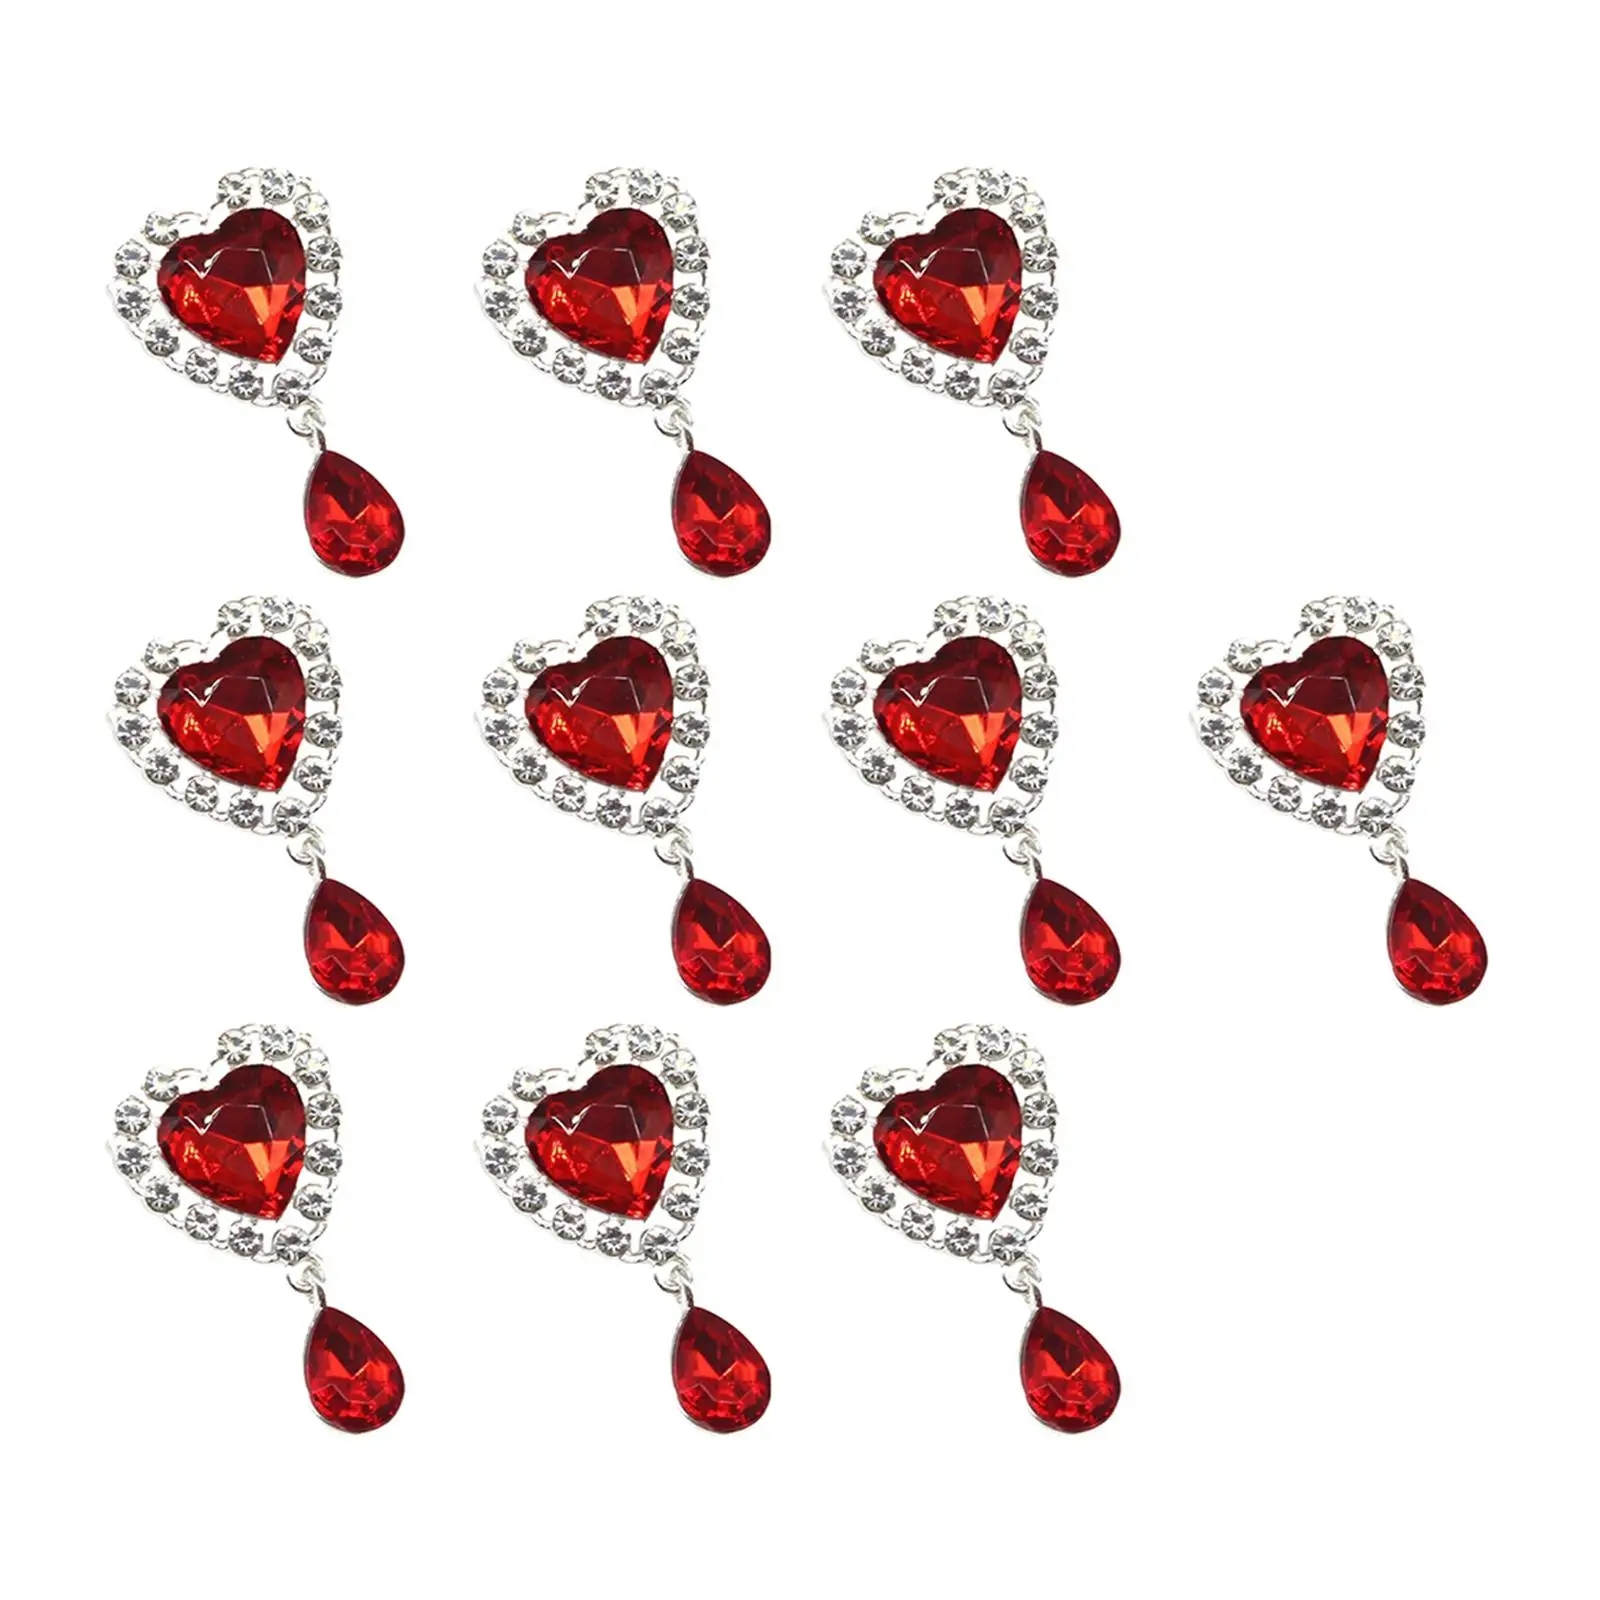 10Pcs Charms Pendants Pendants Embellishments Necklace Craft Supplies Bling Decor Rhinestone Charms for Bouquet Wedding Clothes